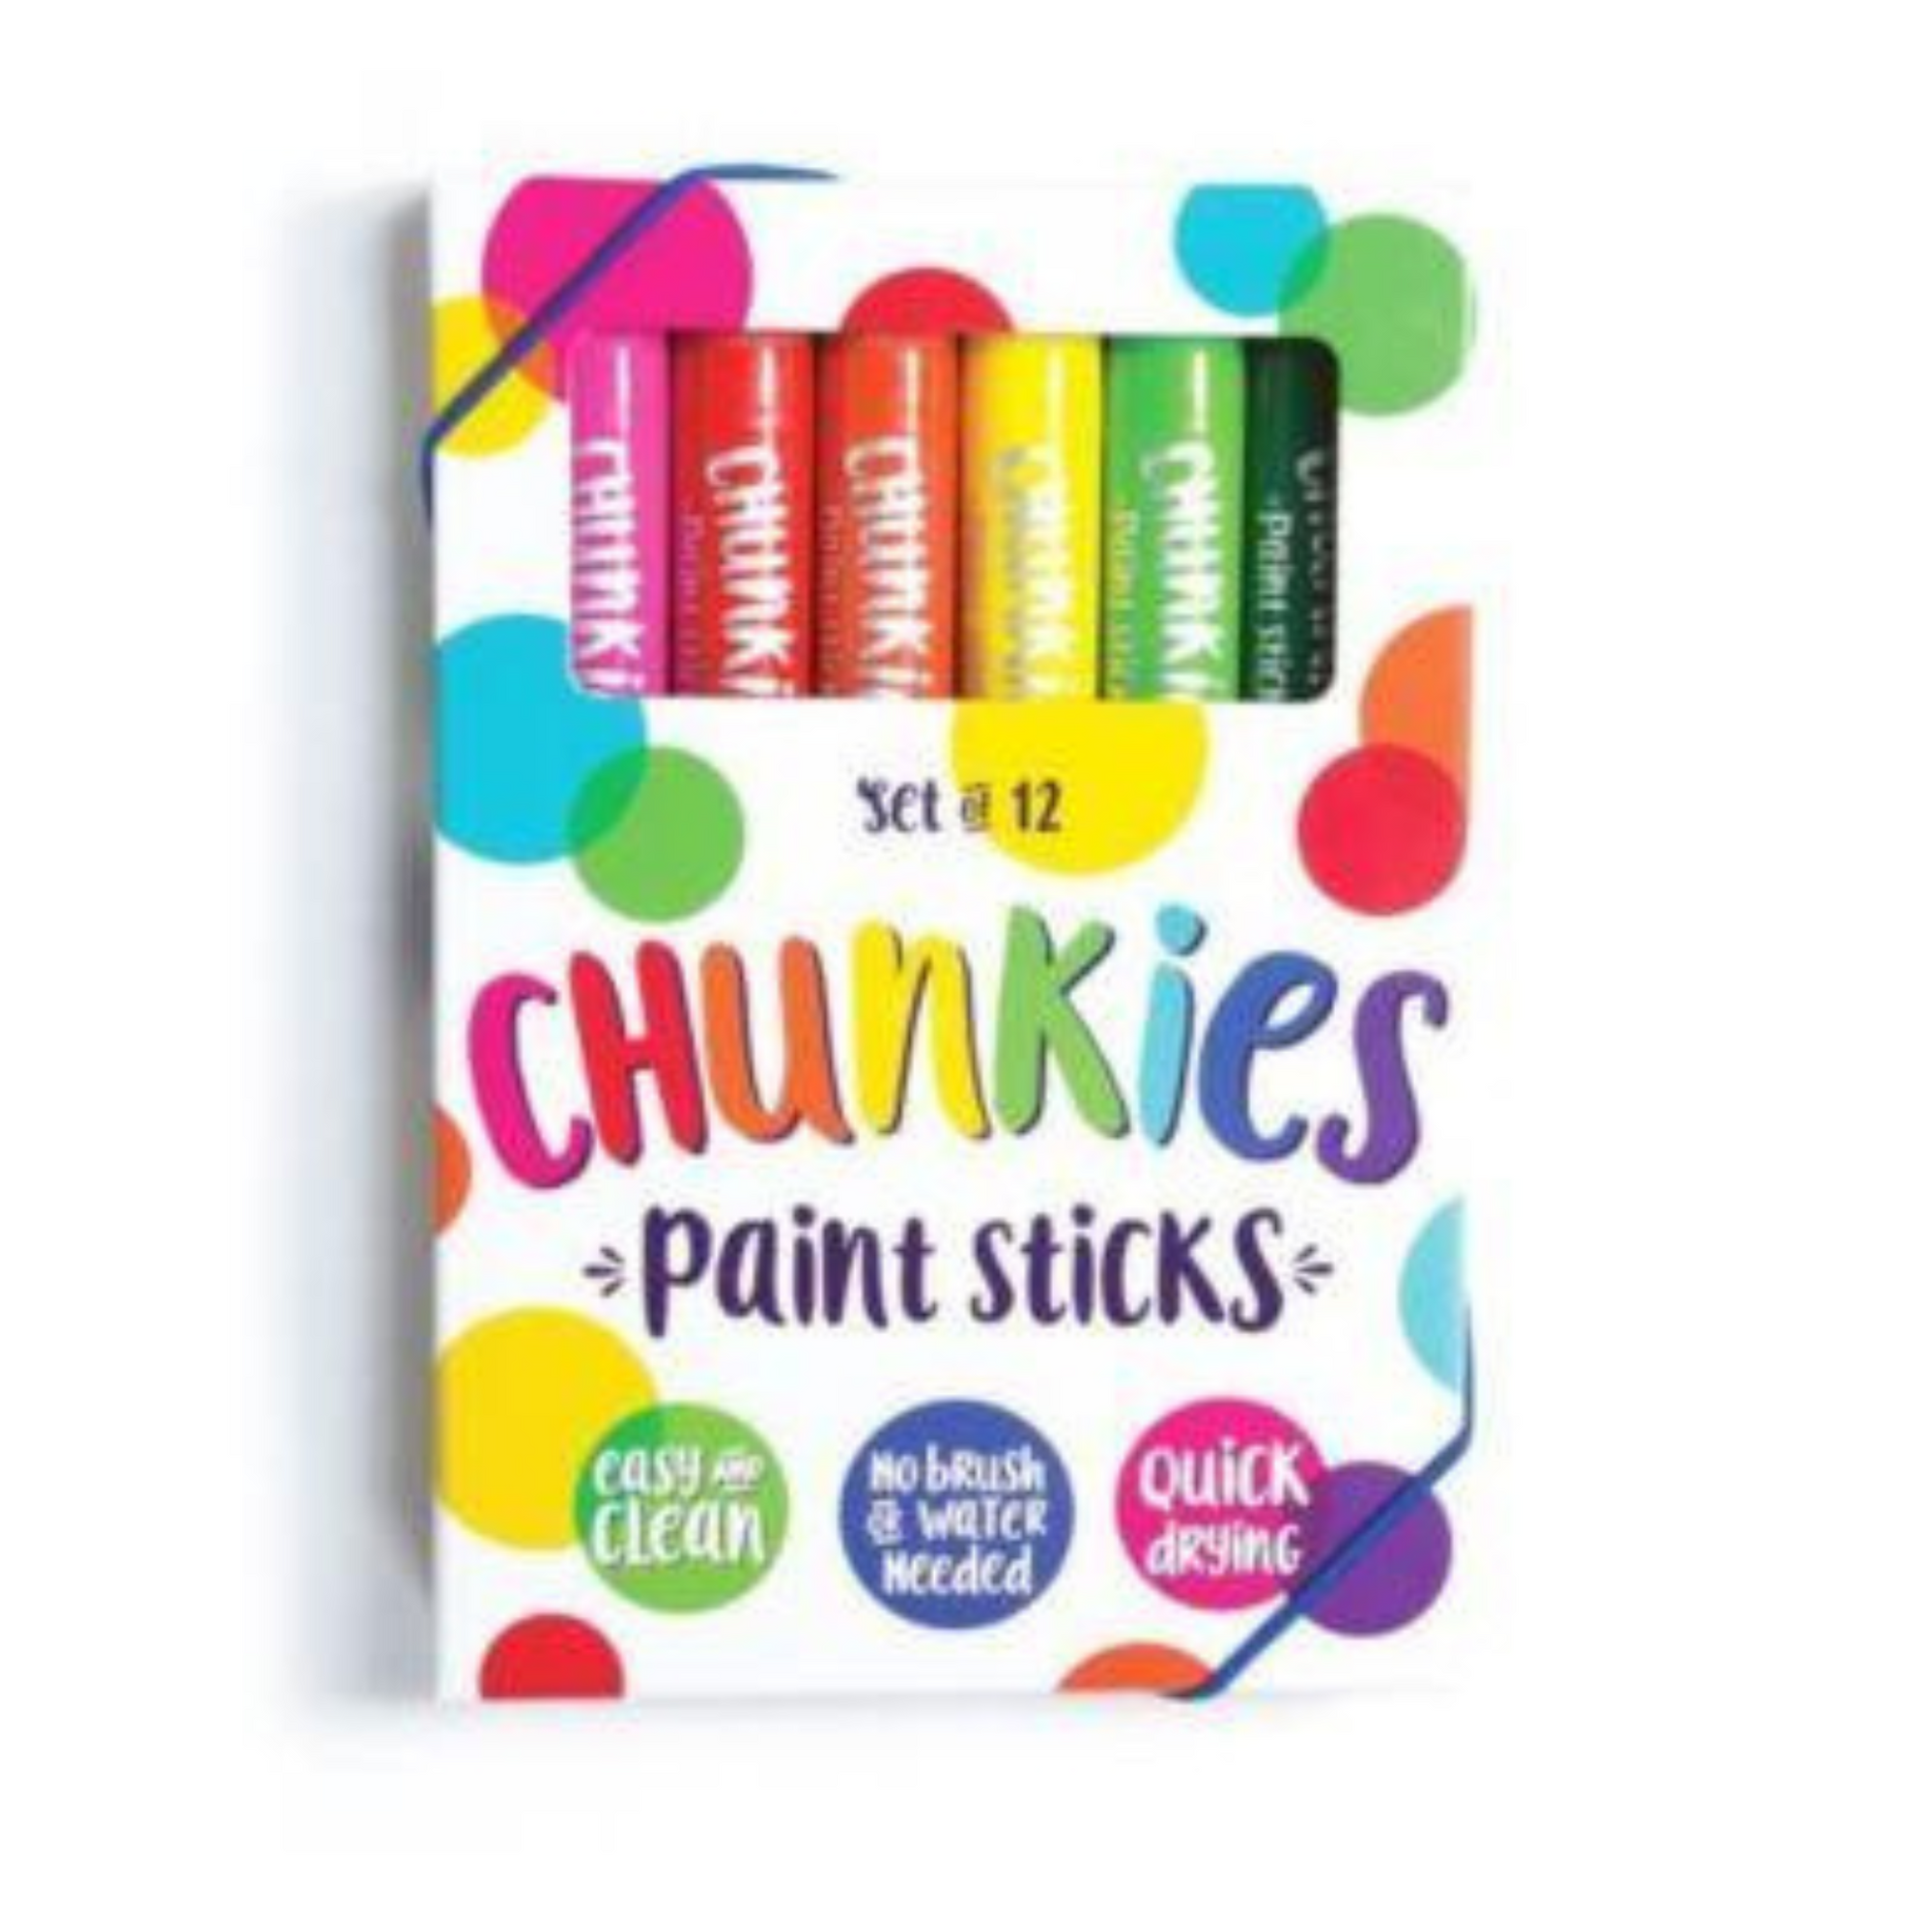 Chunky Paint Sticks set of 12